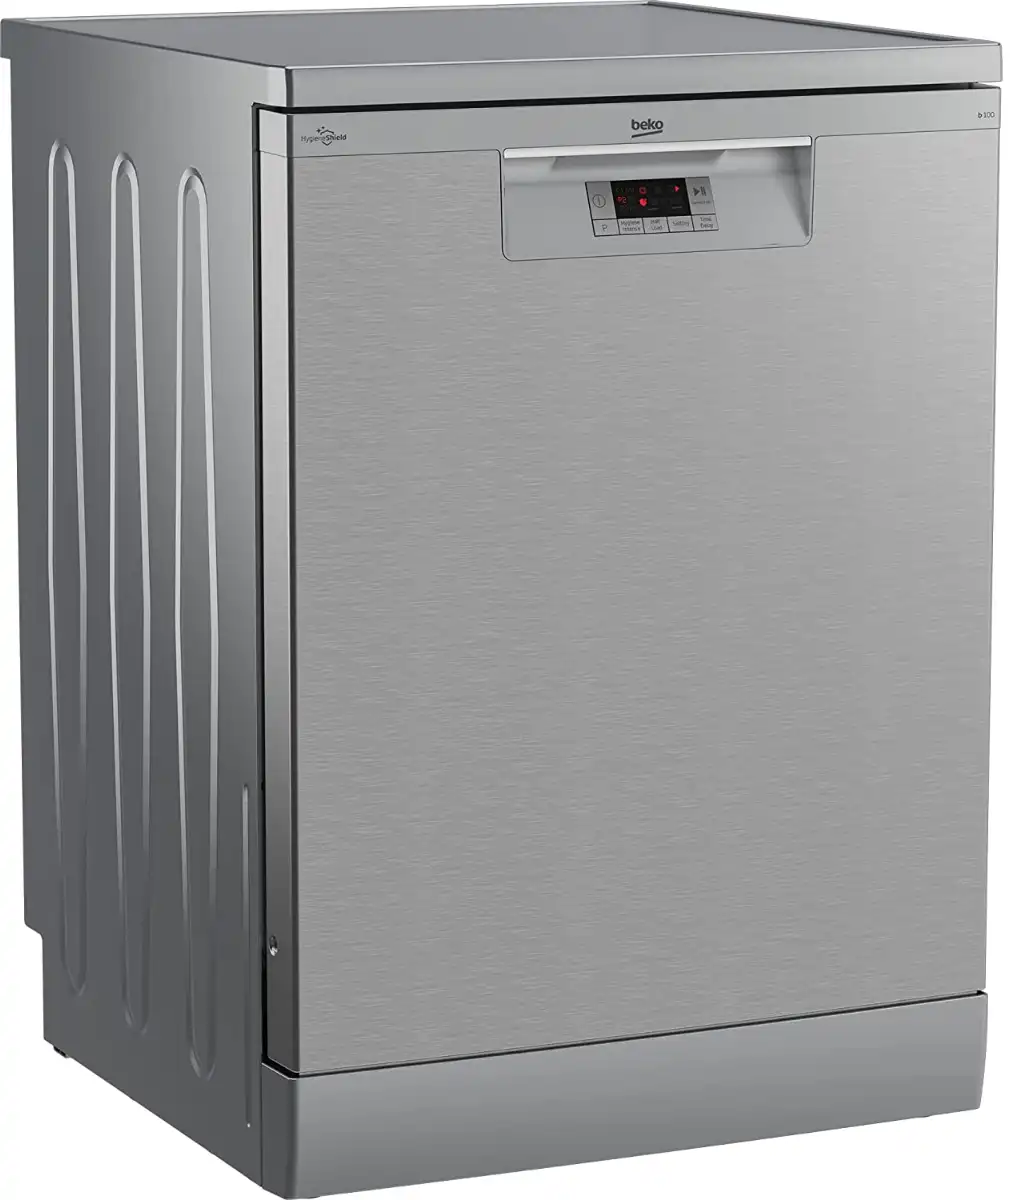 Beko Dishwasher 14 Place Settings, 60 cm, 5 Programs, Half Load, Intensive Clean, Steam Polishing, Silver, DFN15420S